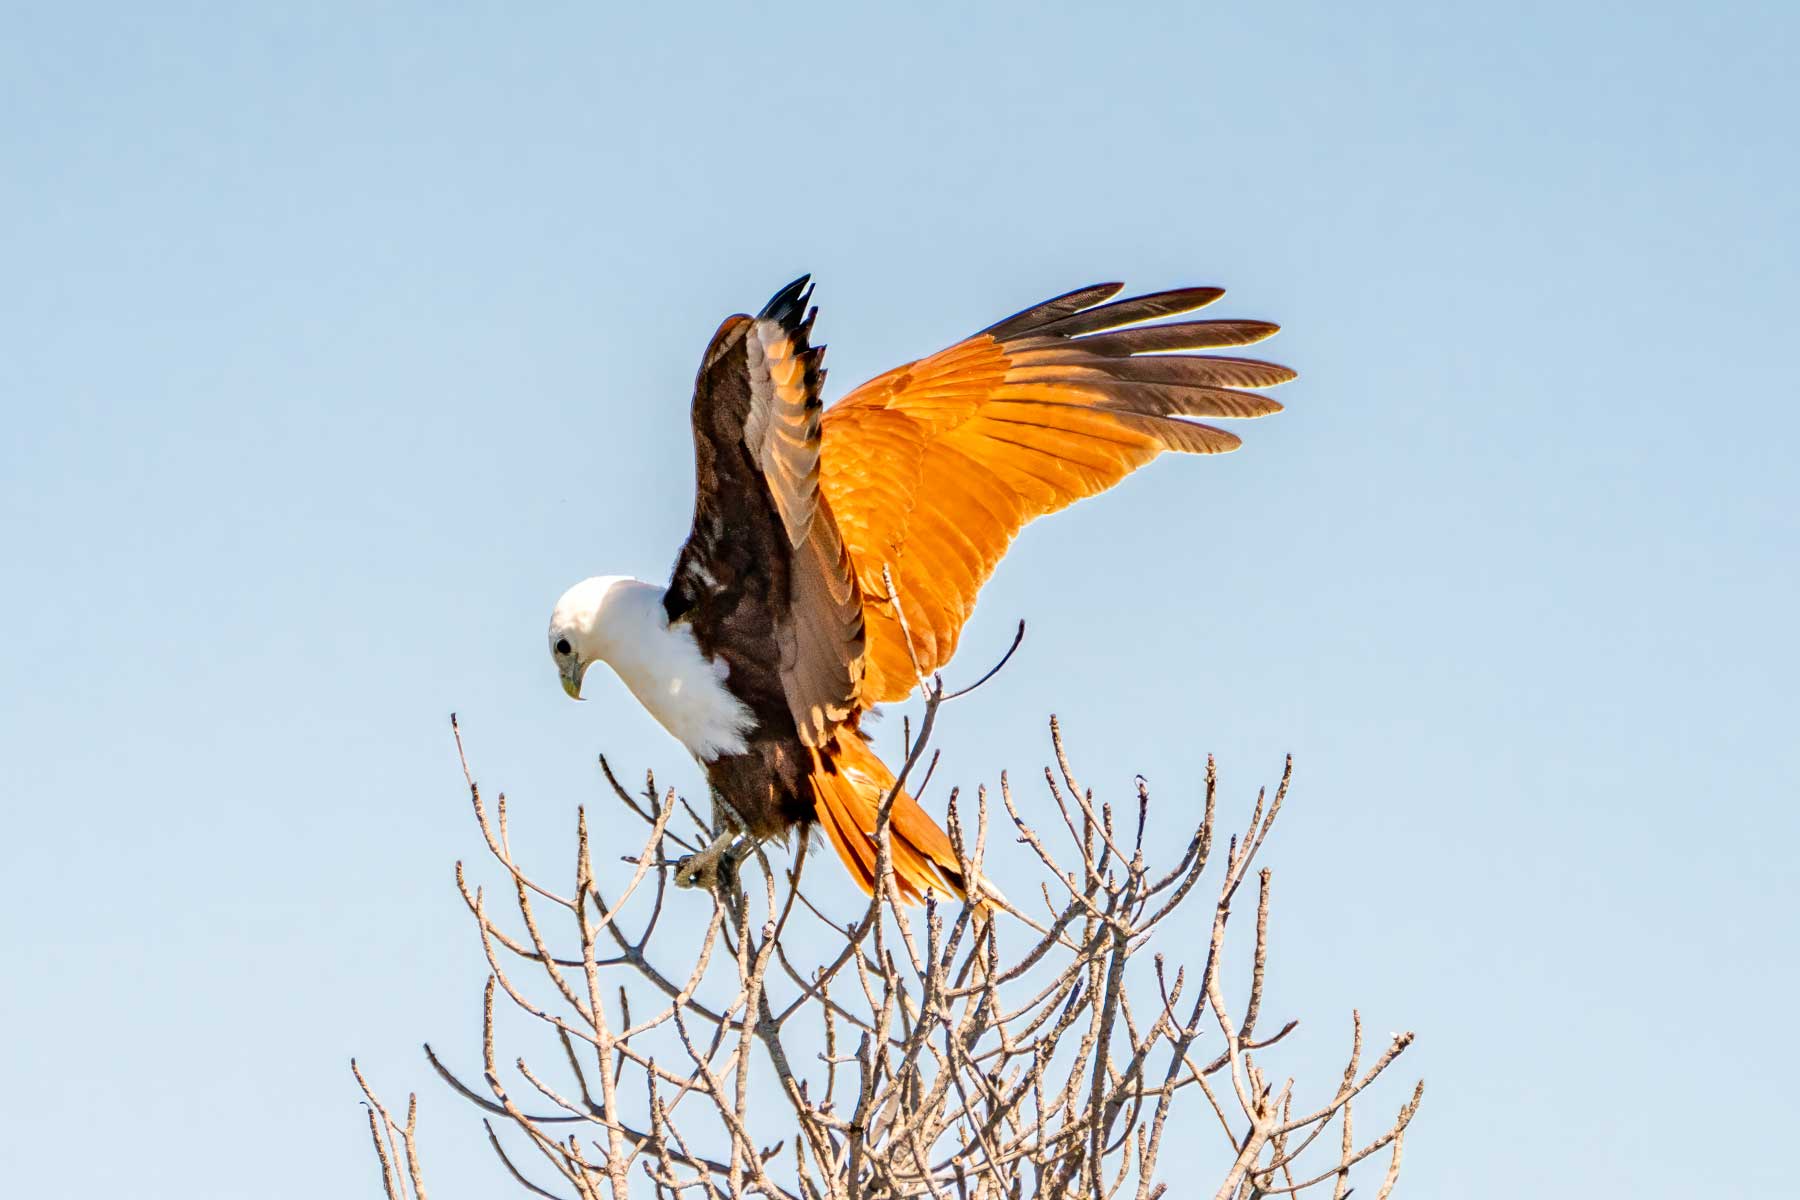 A brahminy kite lands on top of a mangrove